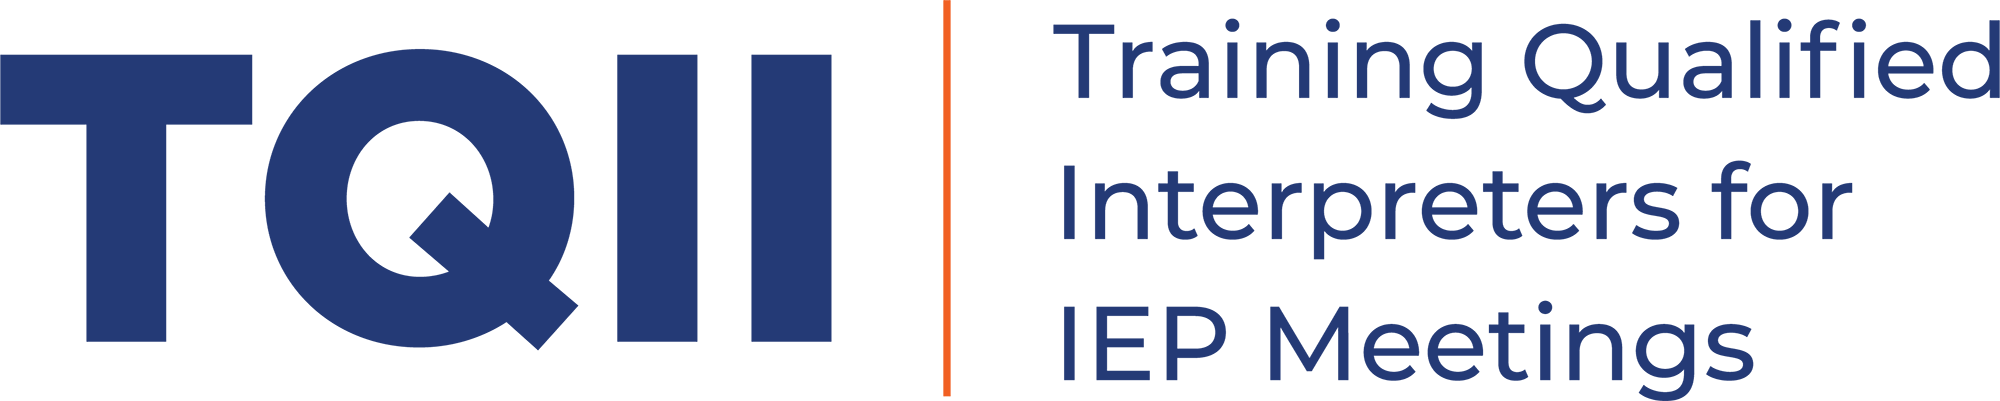 TQII - Training Qualified Interpreters for IEP Meetings